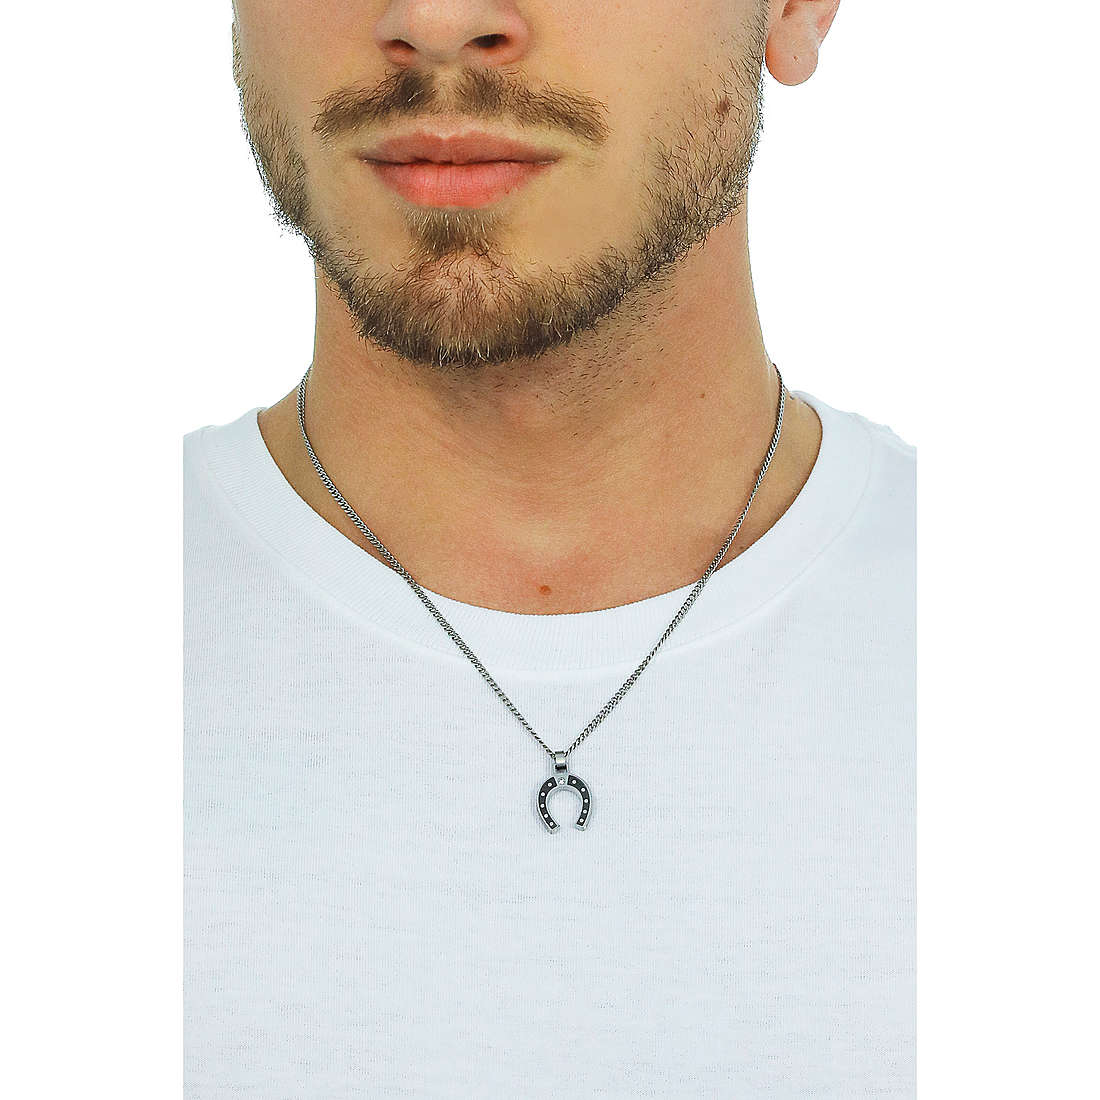 Kidult necklaces Symbols man 751214 wearing